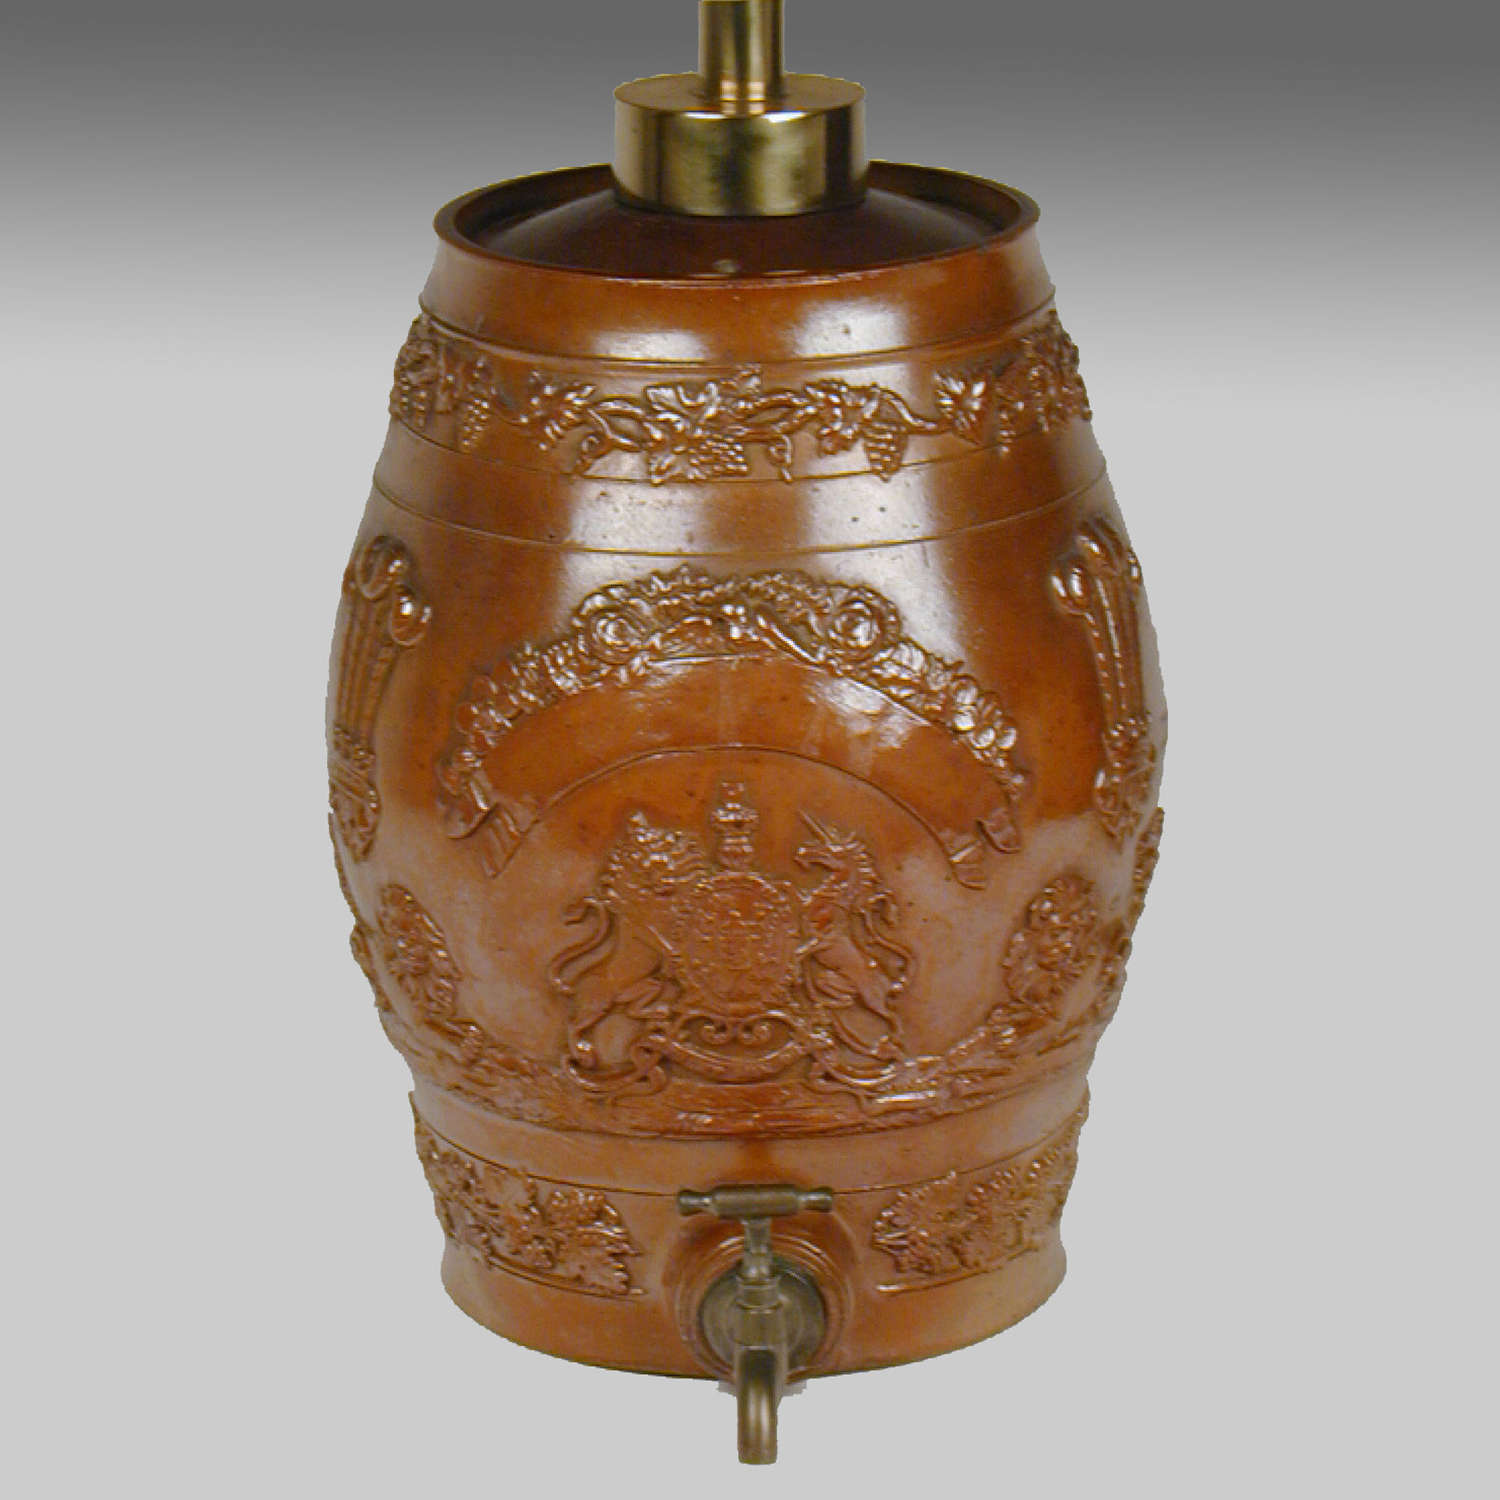 Derbyshire Brampton pottery salt-glazed stoneware spirit barrel